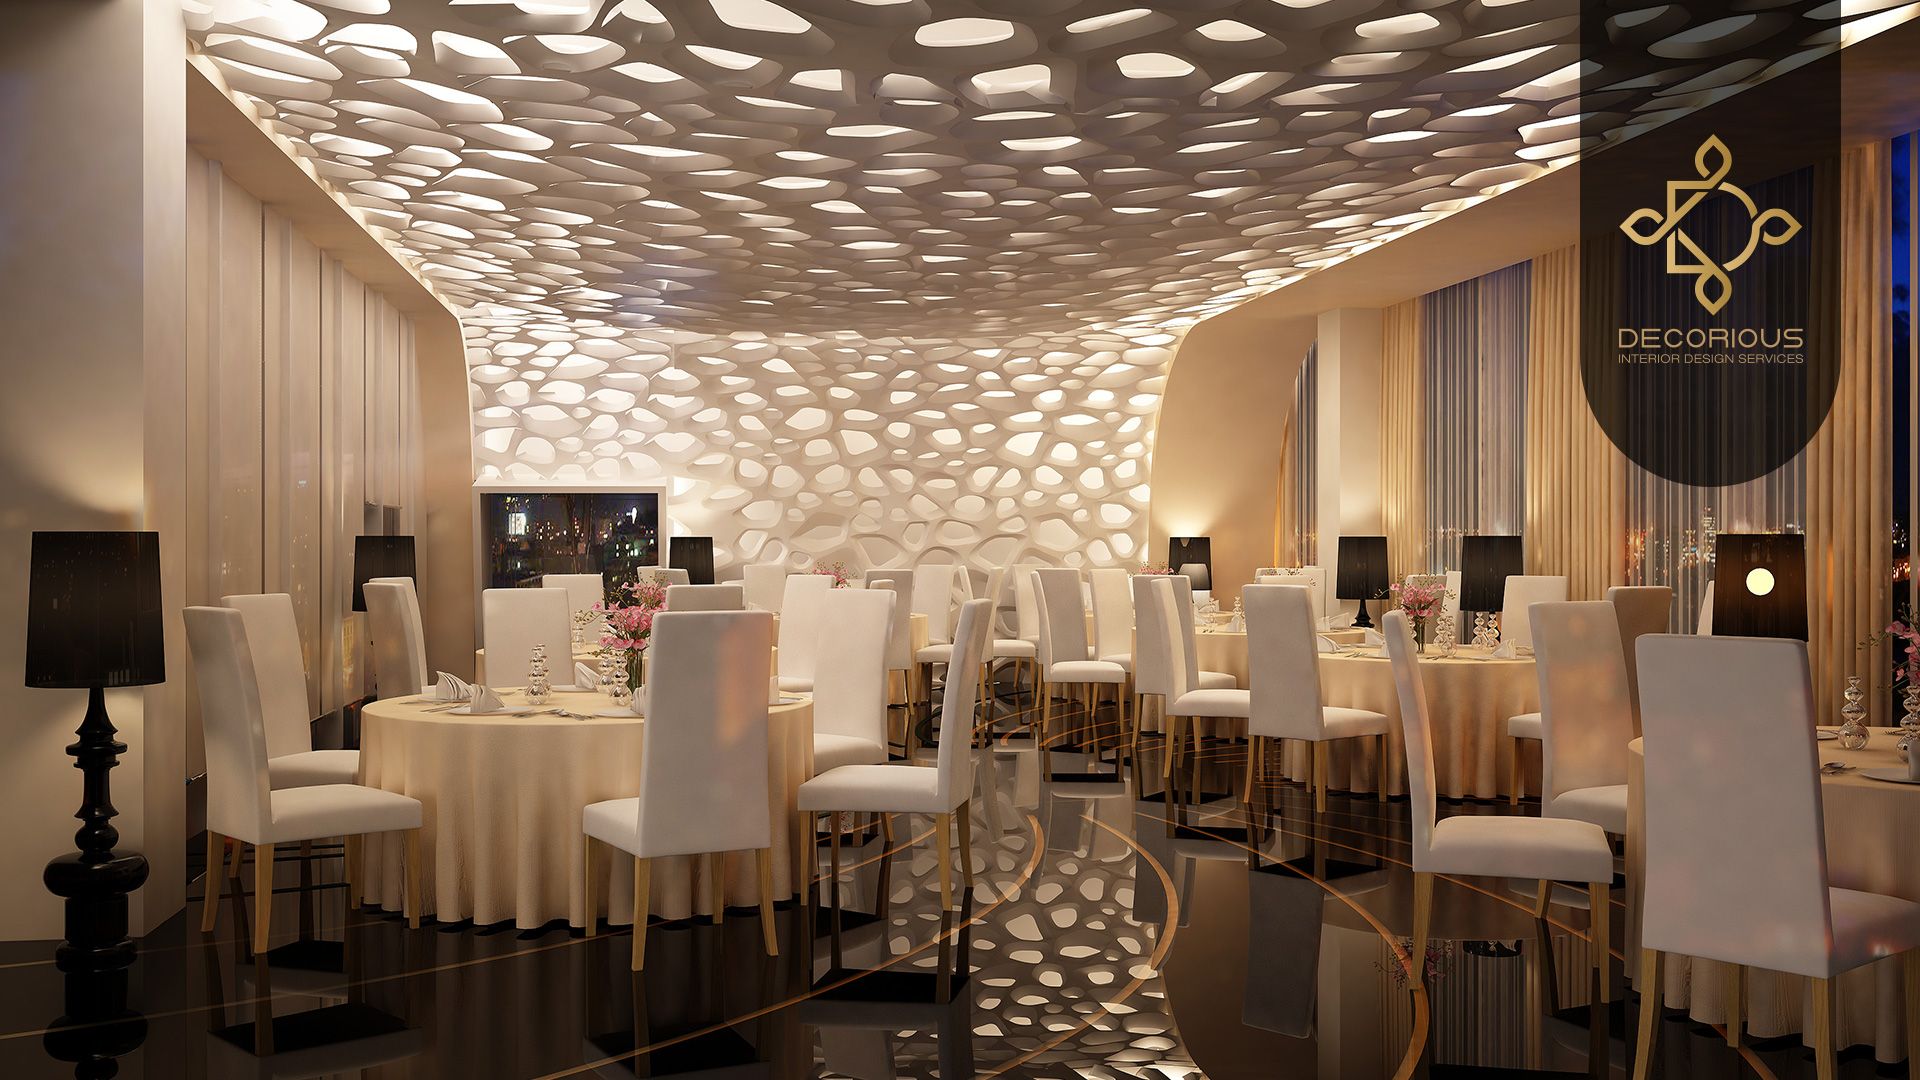 Restaurant Interior Design Ideas That Boost Lavishness and Luxury